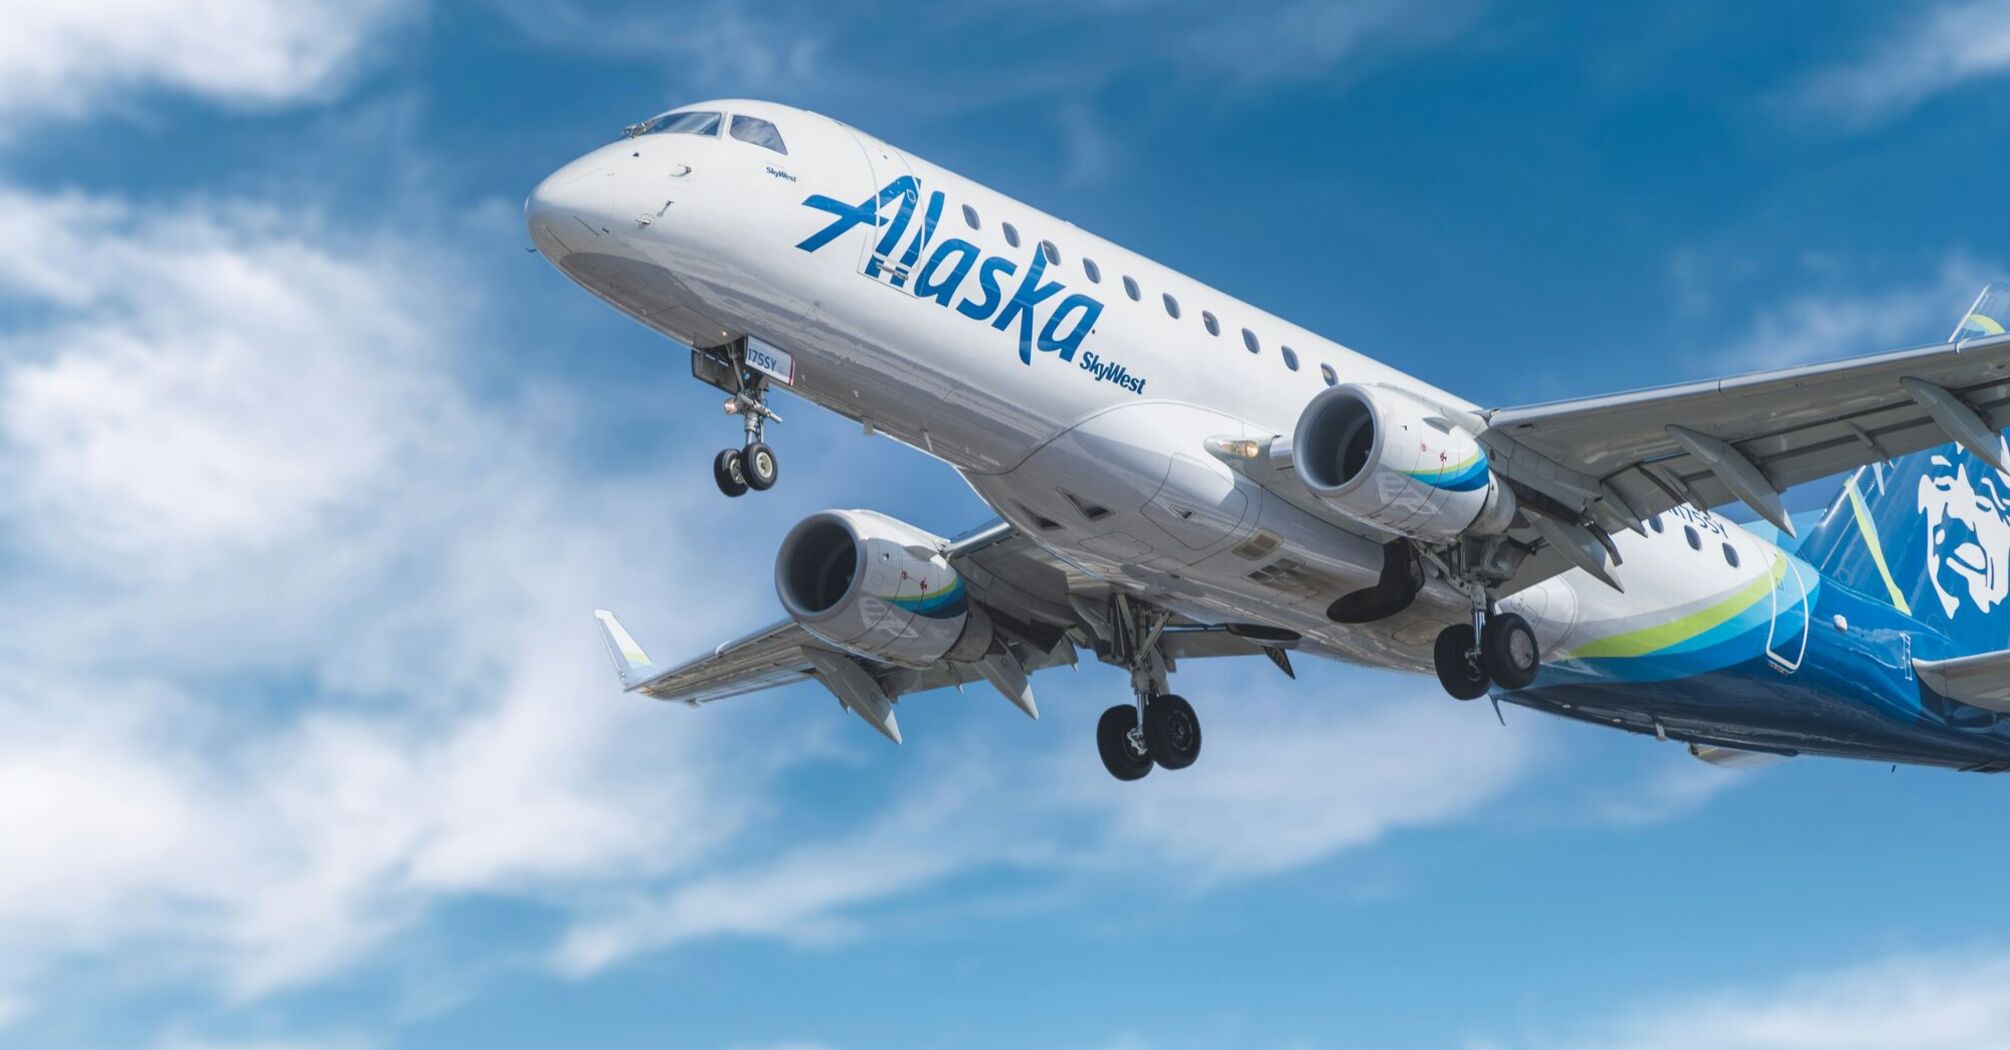 white and blue Alaska Airlines passenger plane under blue sky during daytime